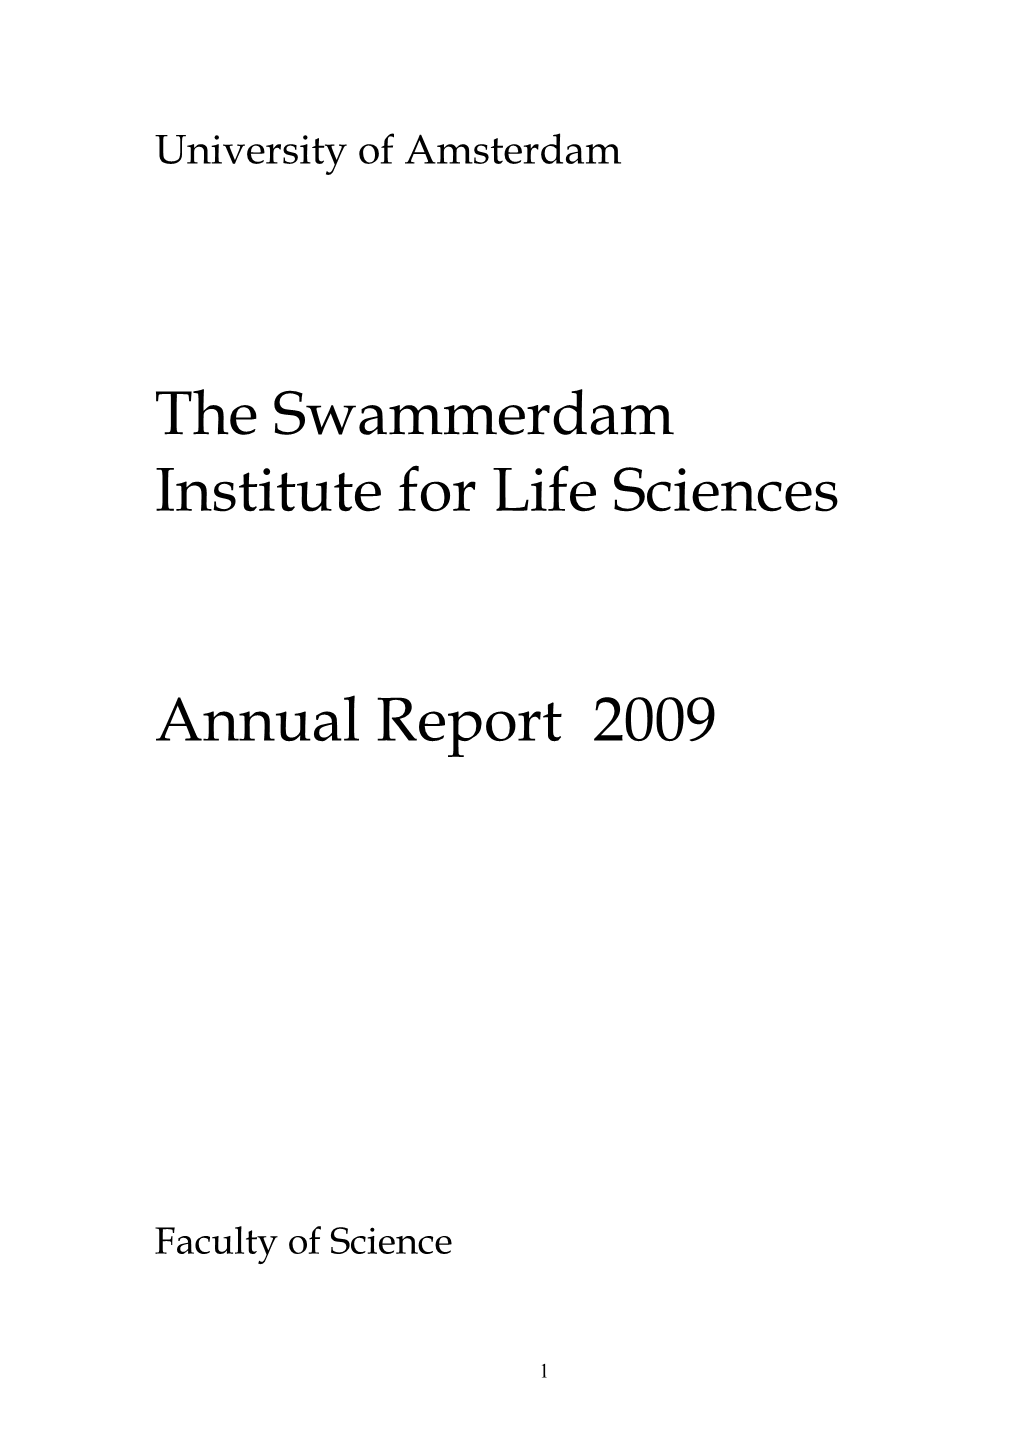 The Swammerdam Institute for Life Sciences Annual Report 2009